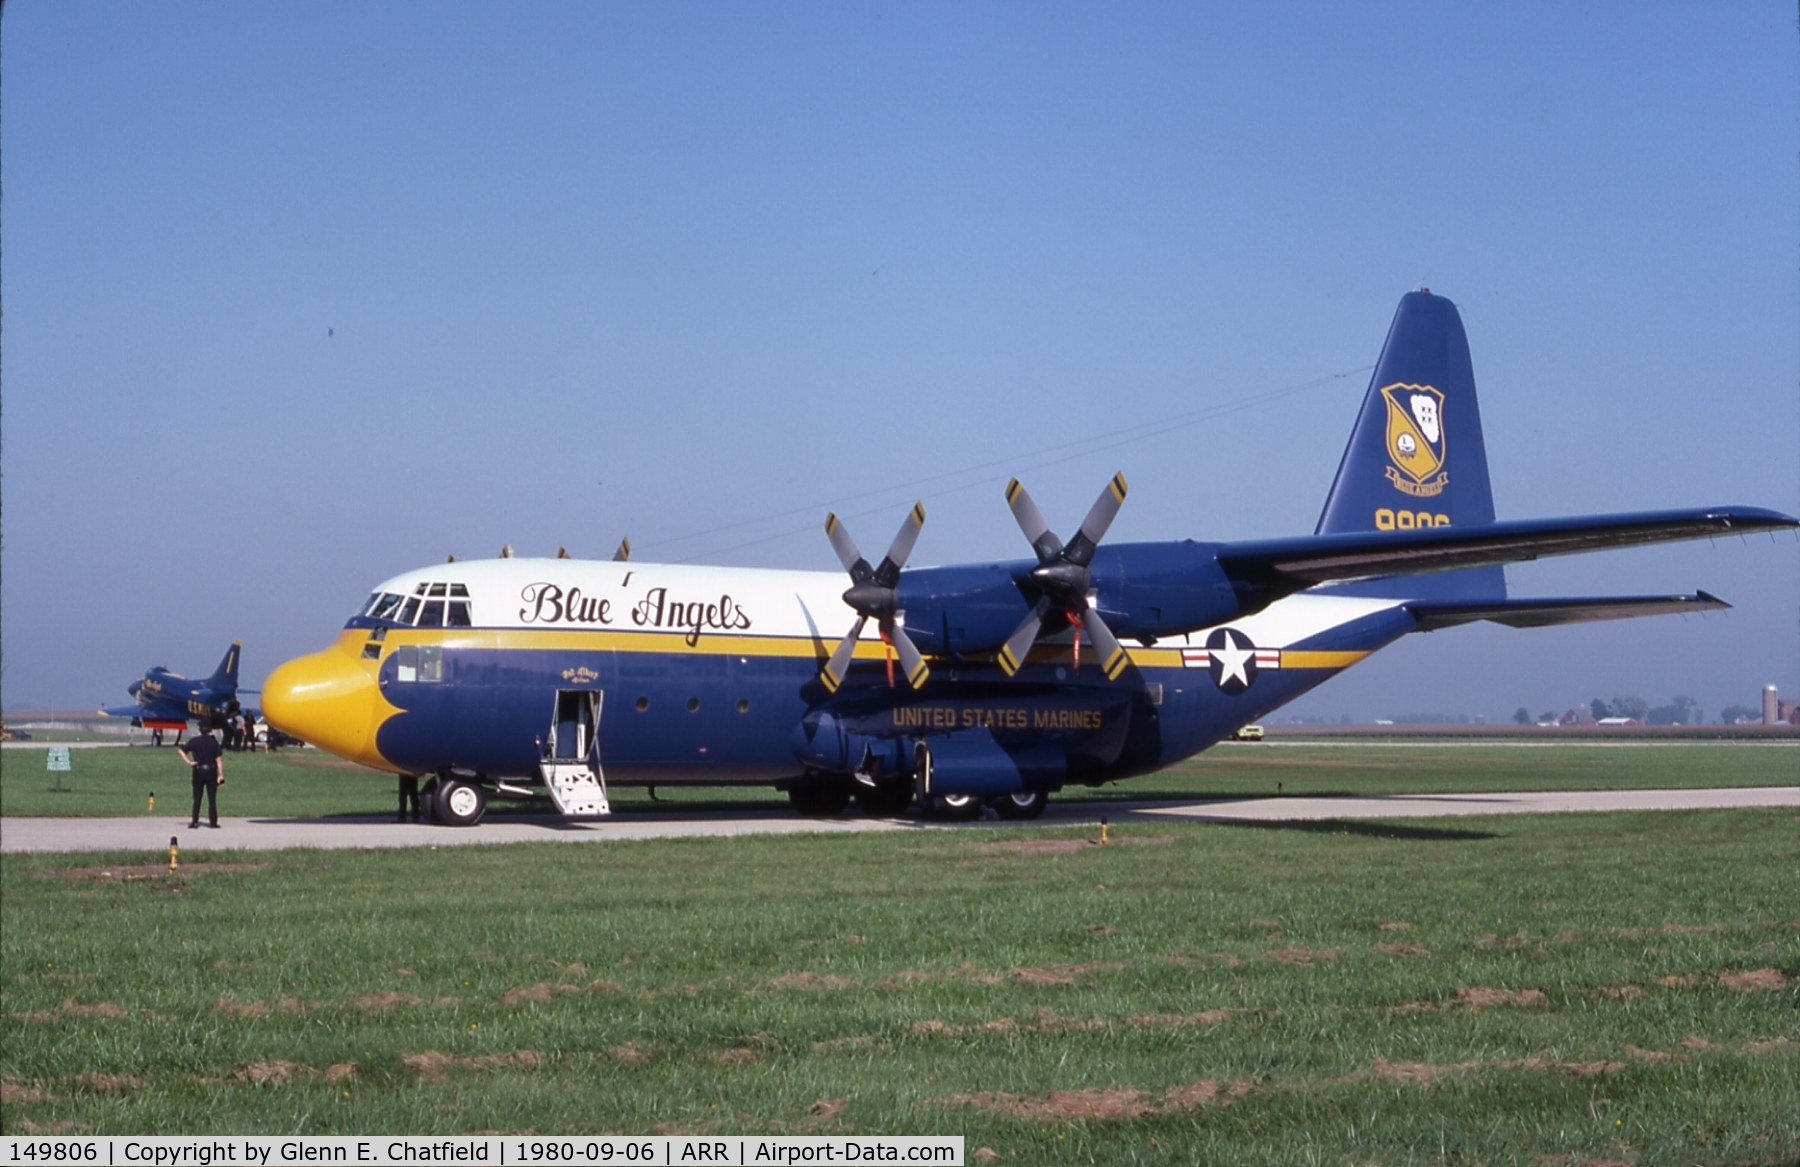 149806, 1963 Lockheed KC-130F Hercules C/N 282-3703, Blue Angels's support aircraft